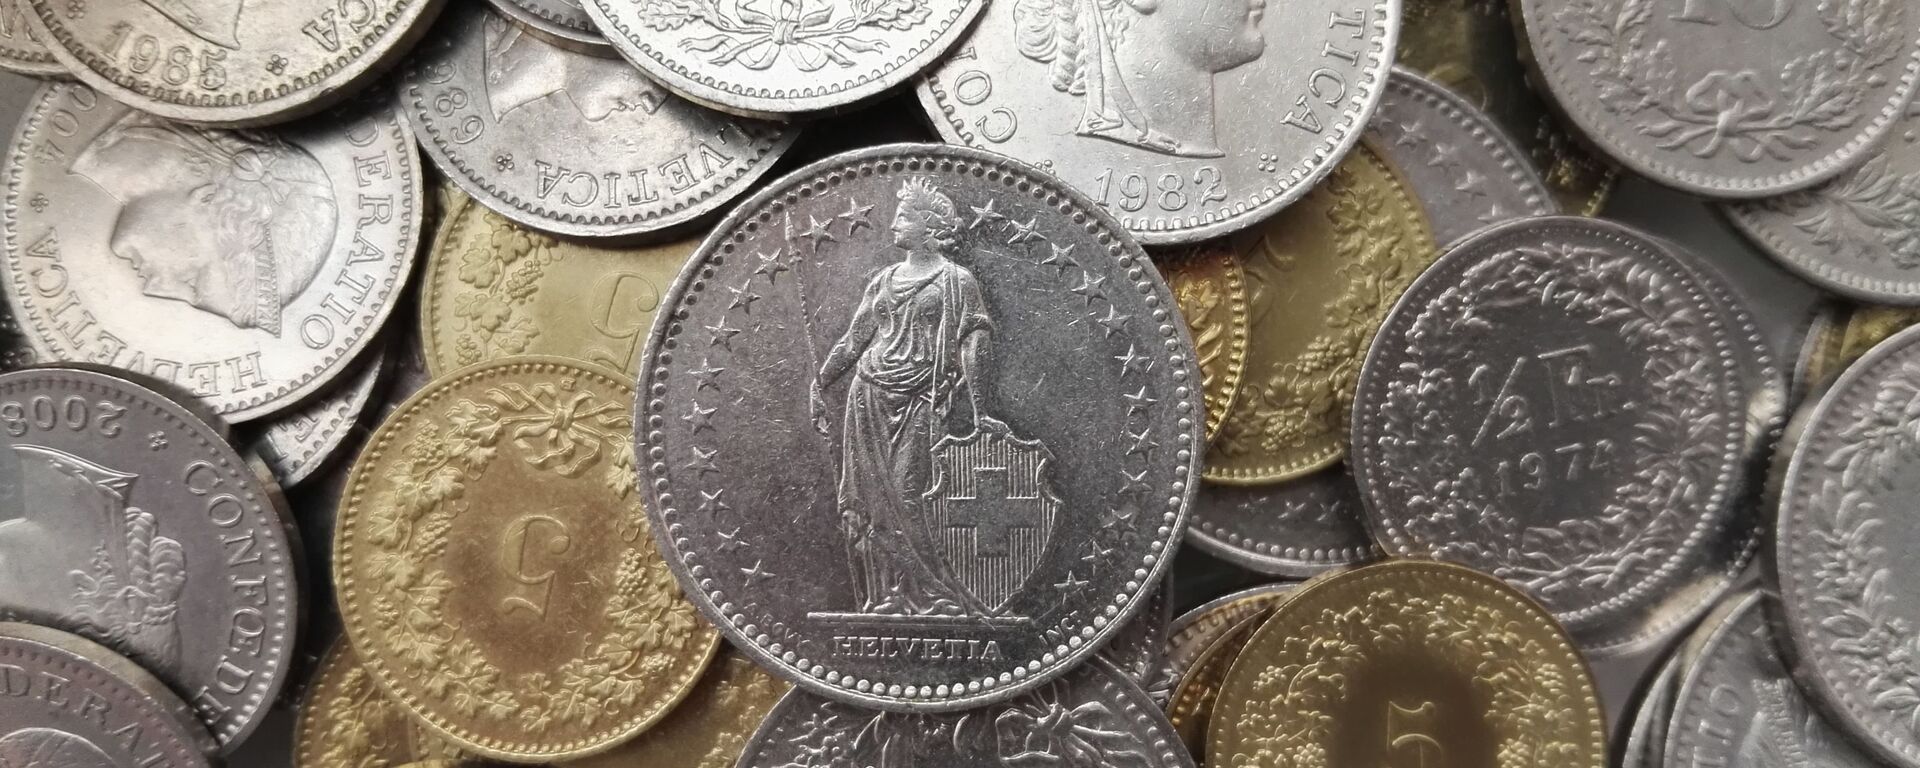 Швейцарские франки - Sputnik Таджикистан, 1920, 30.08.2021